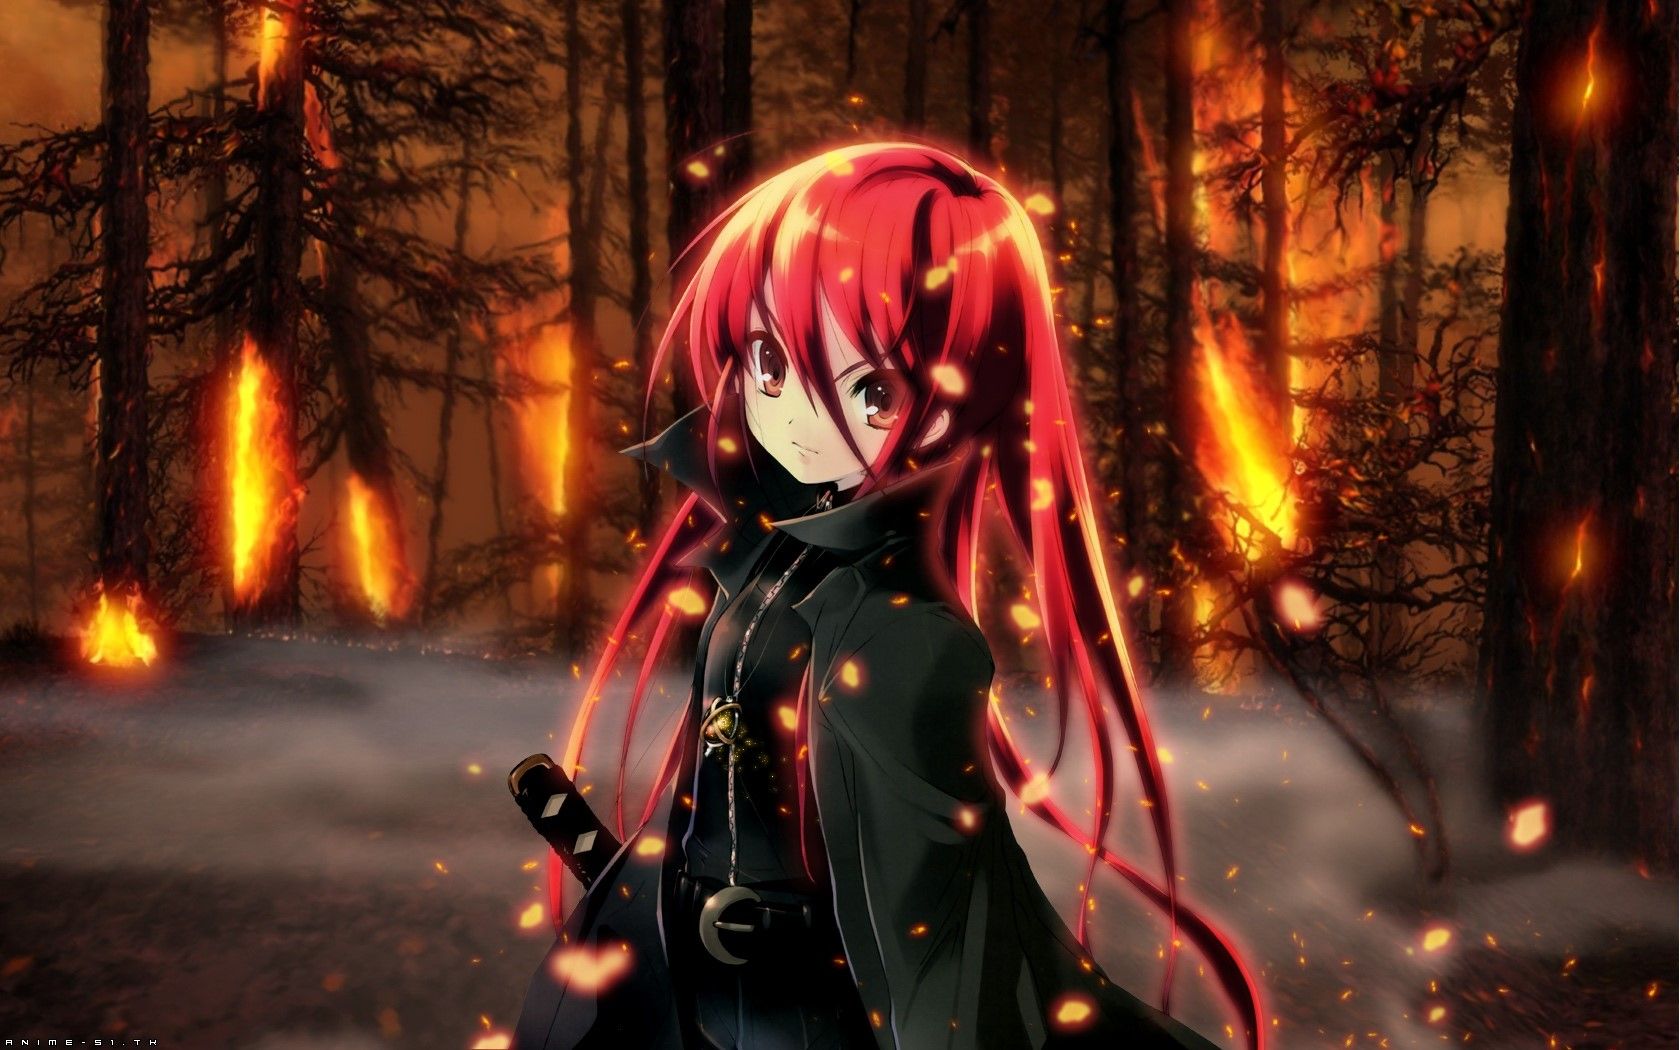 Girl, Look, Sword, Fire, Forest wallpaper JPG. Anime. Tokkoro.com Amazing HD Wallpaper